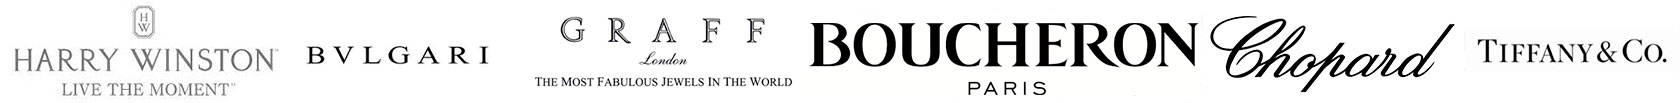 Логотипы ювелирных брендов Graff, Cartier, Chopard, Harry Winston